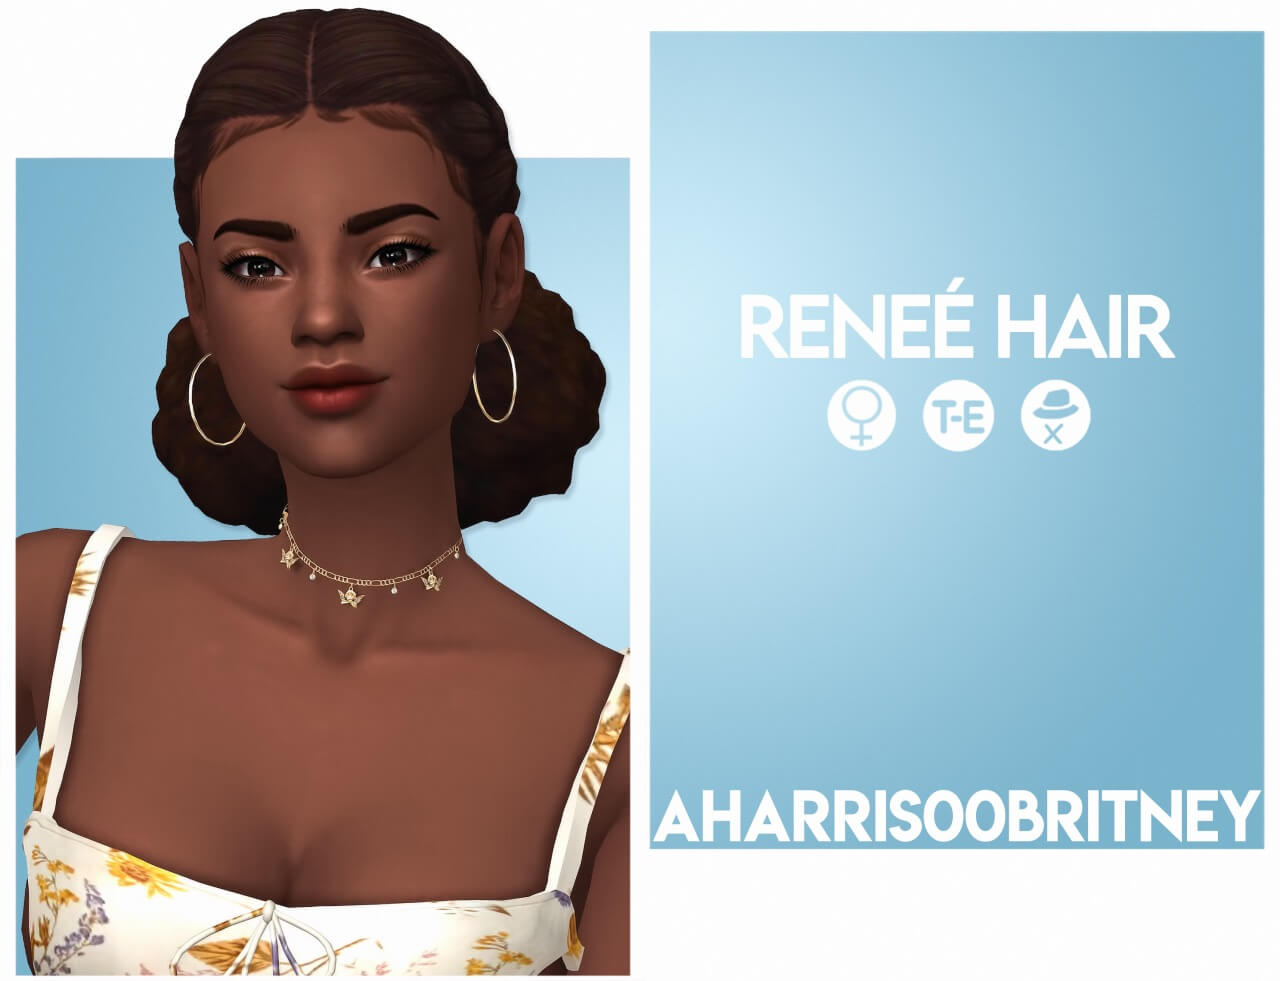 The Sims 4 Reneé Hair at AHarris00Britney - The Sims Game